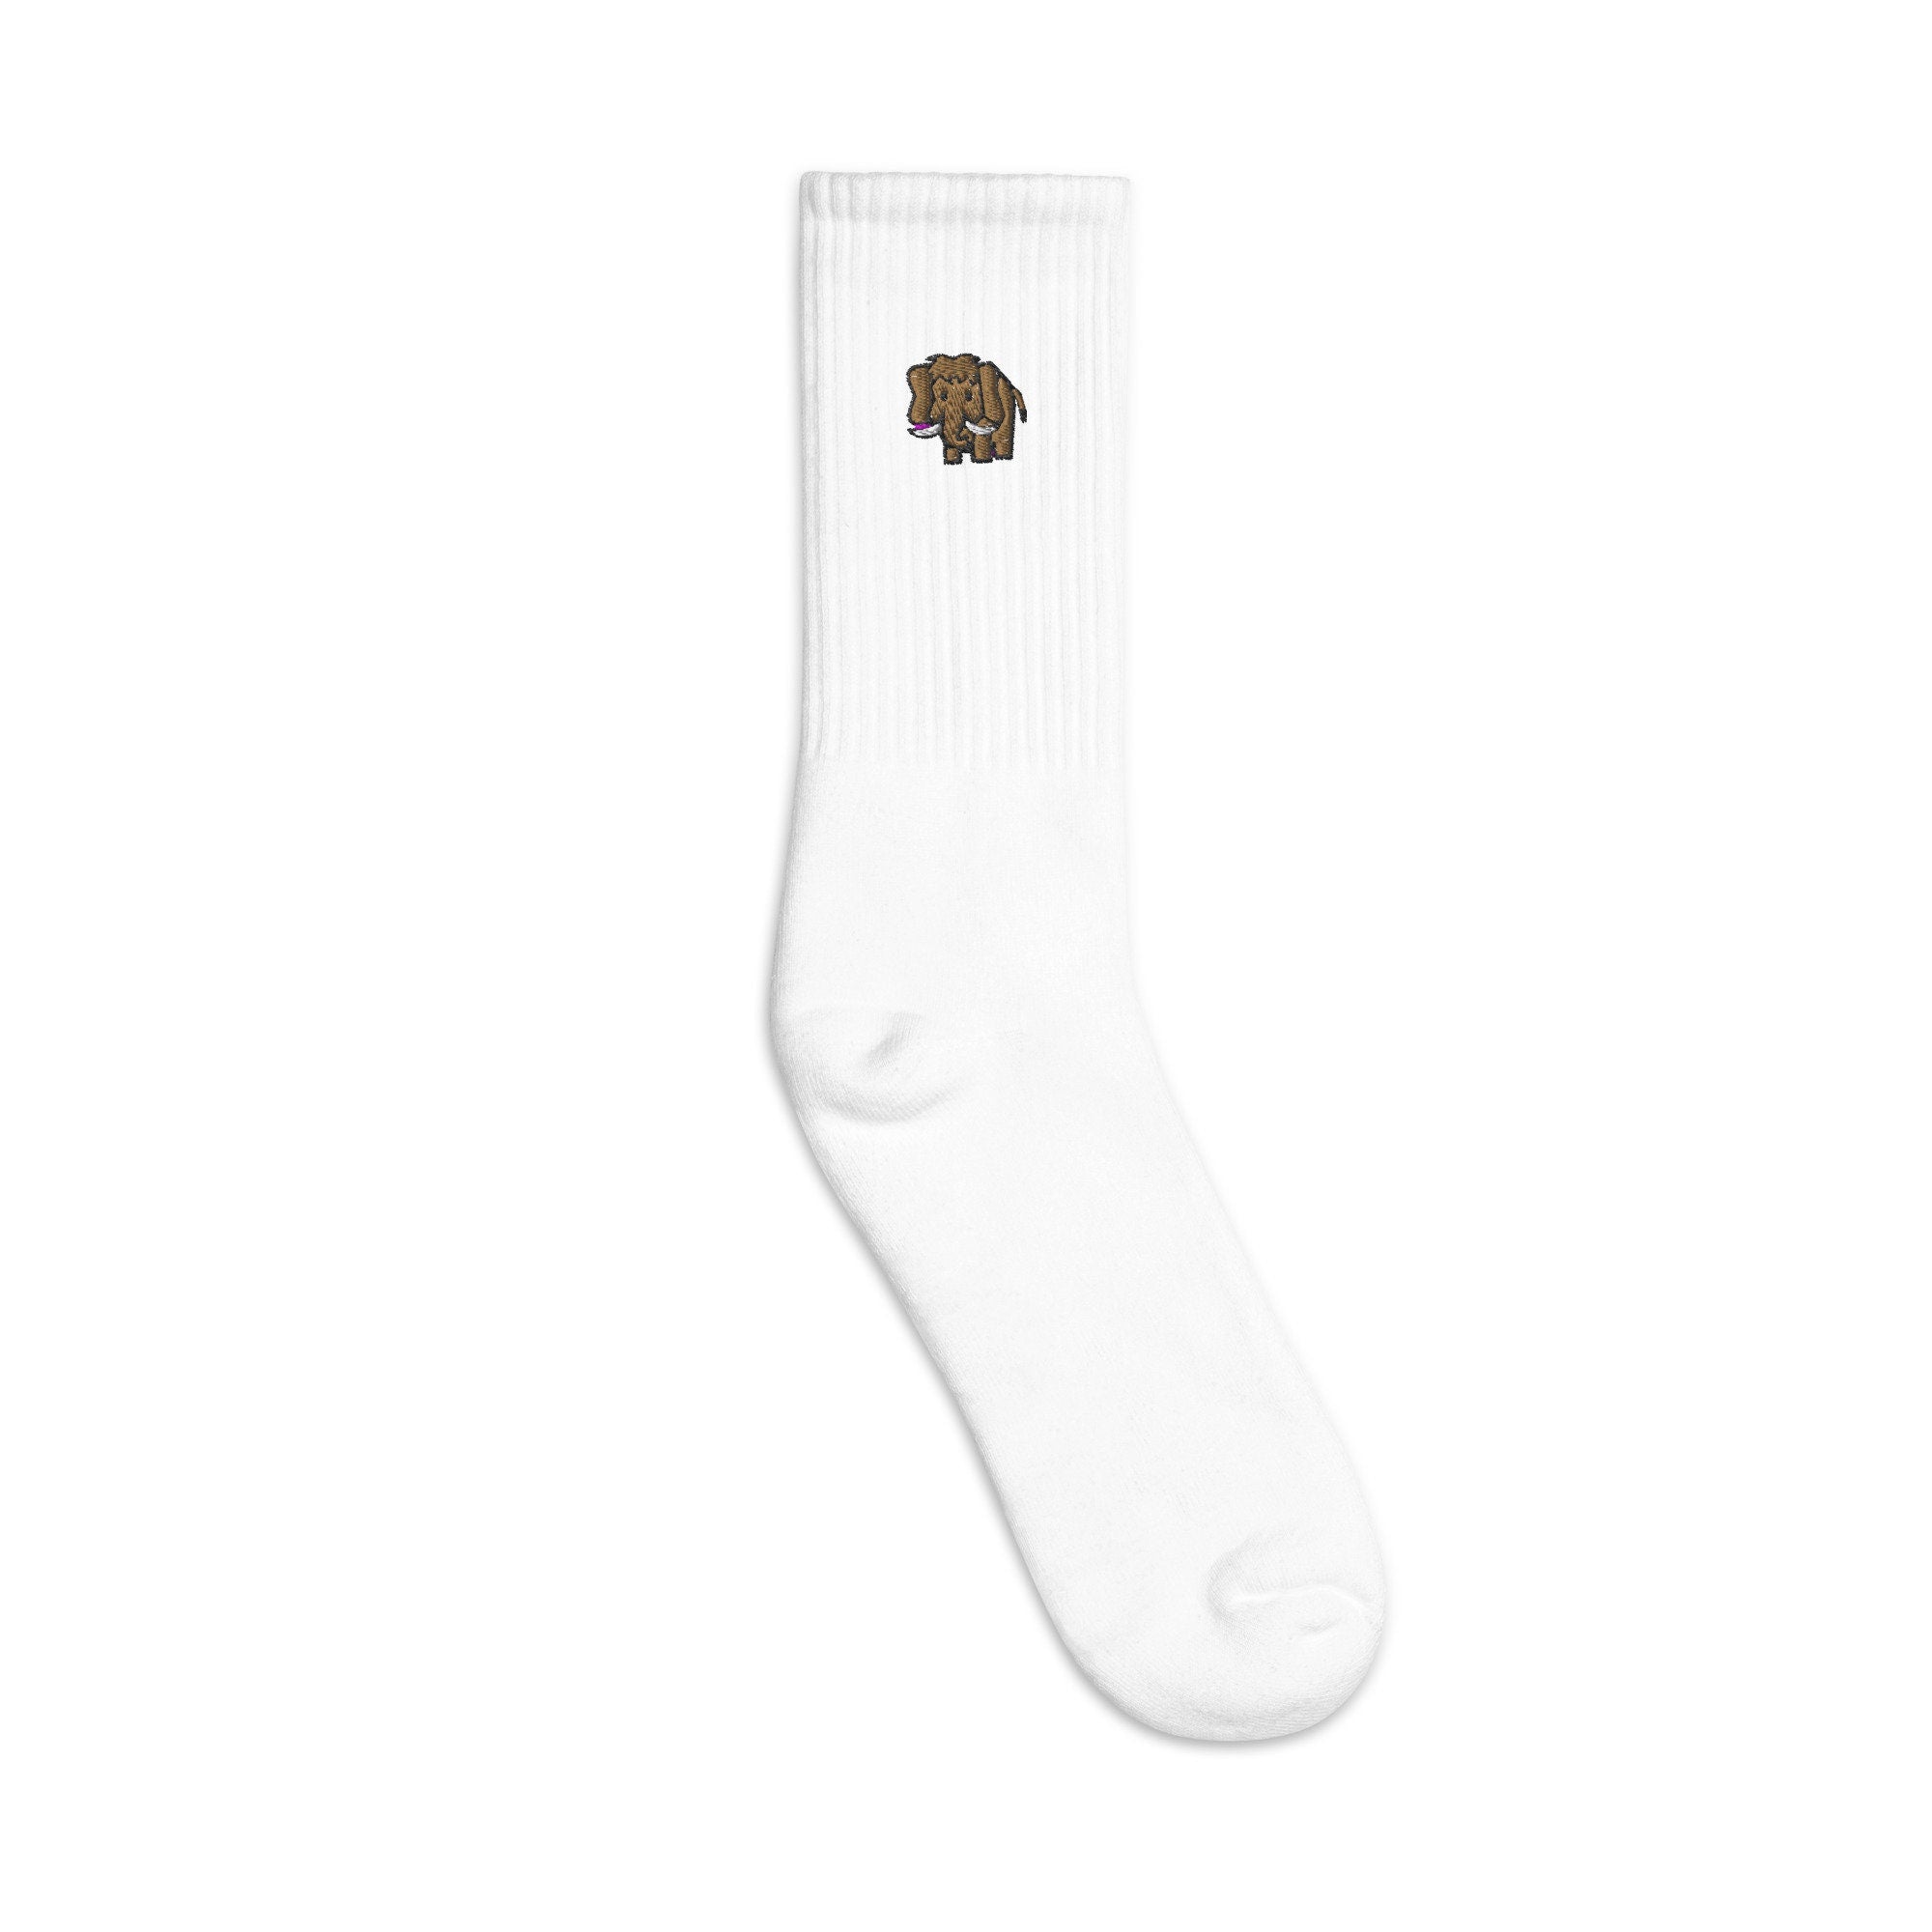 Mammoth Embroidered Socks, Premium Embroidered Socks, Long Socks Gift - Multiple Colors